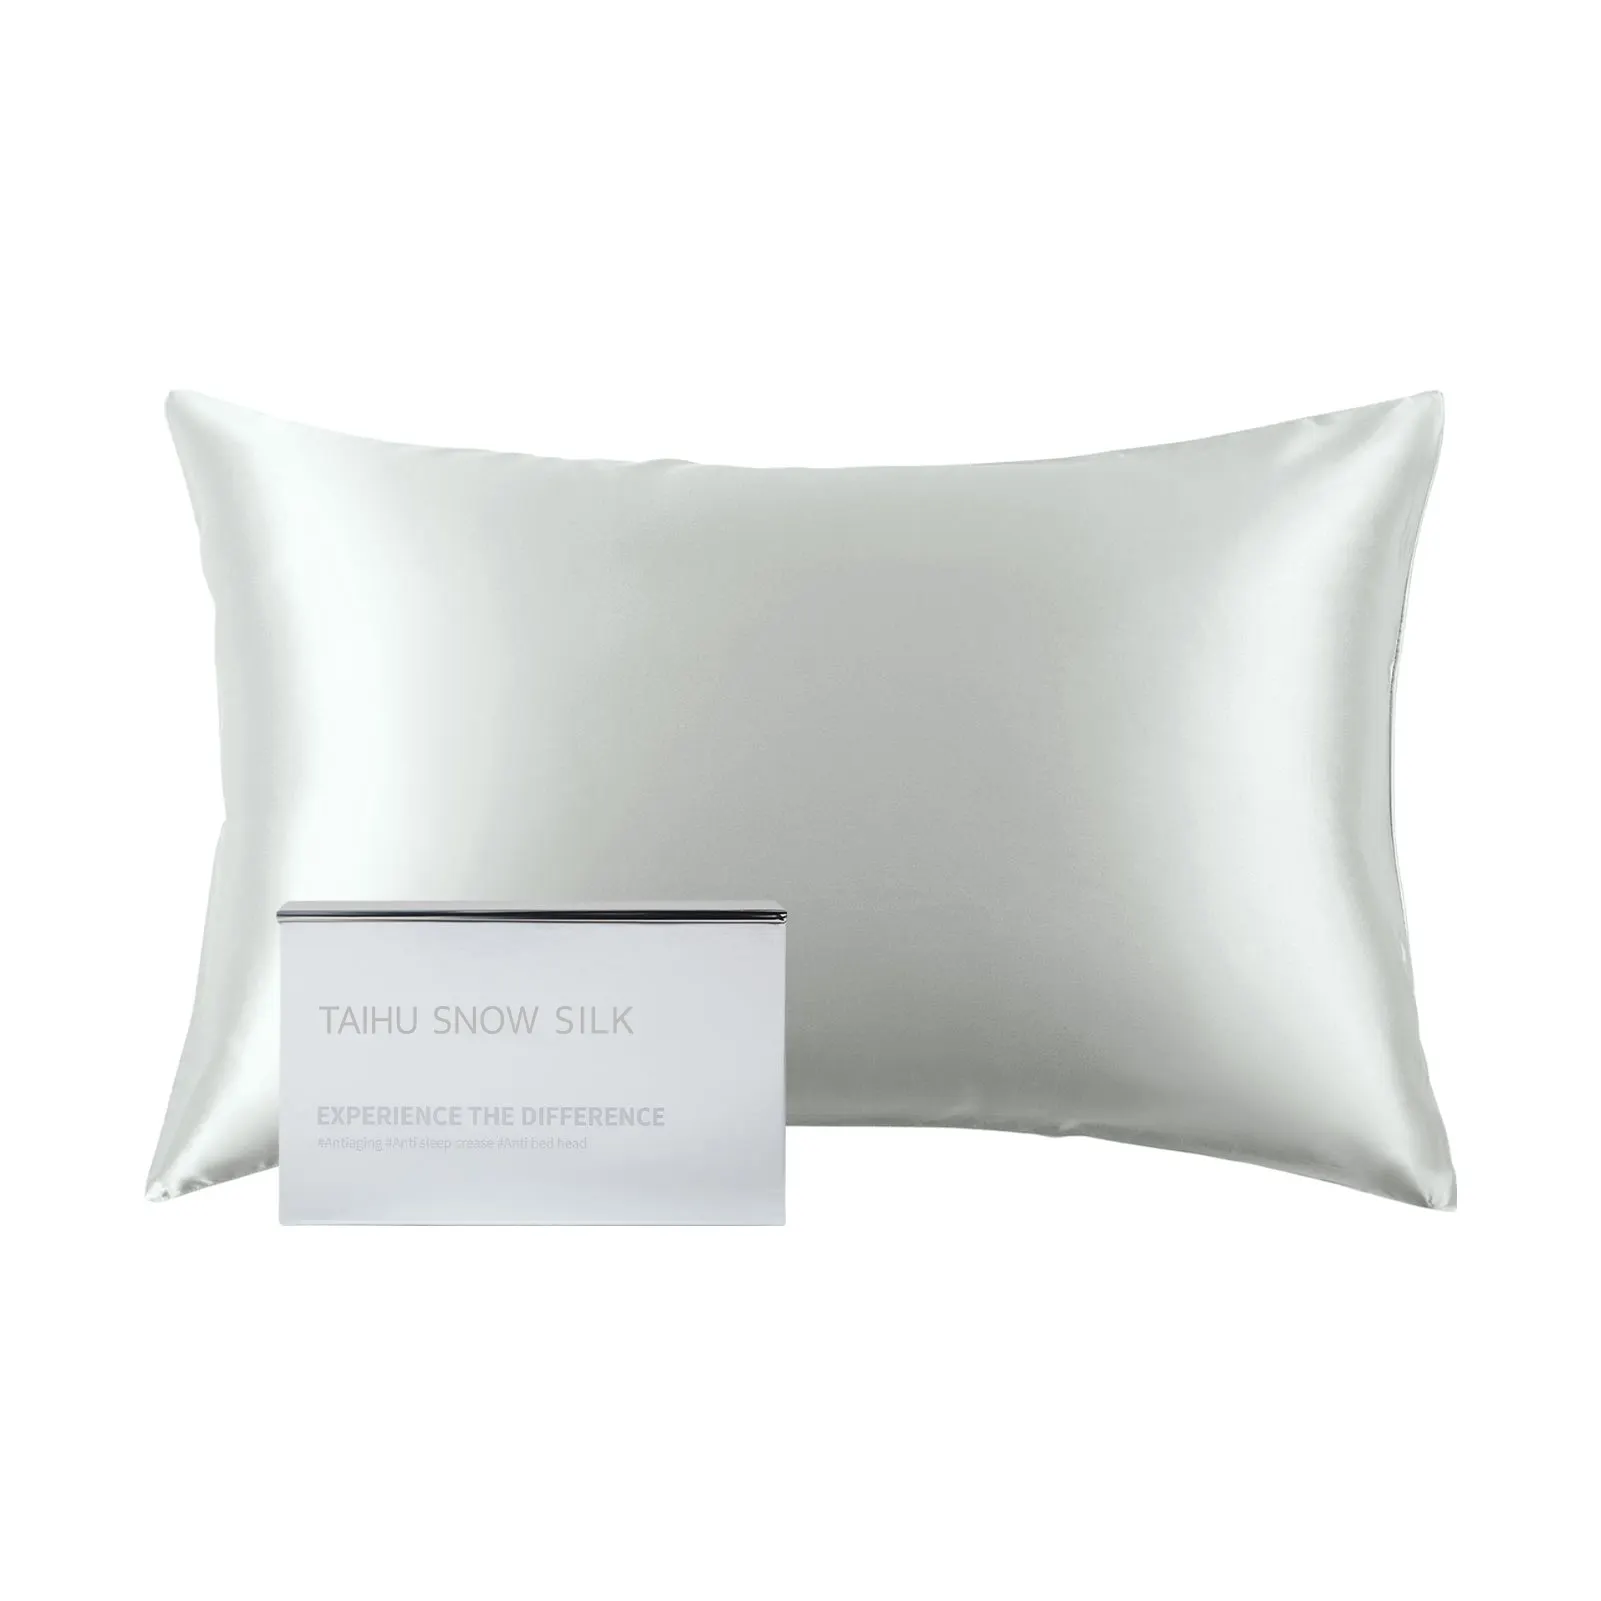 Logotipo personalizado Alta Qualidade 22mm fronha de seda personalizada fit pillow 100% amora fronha de seda com caixa de presente